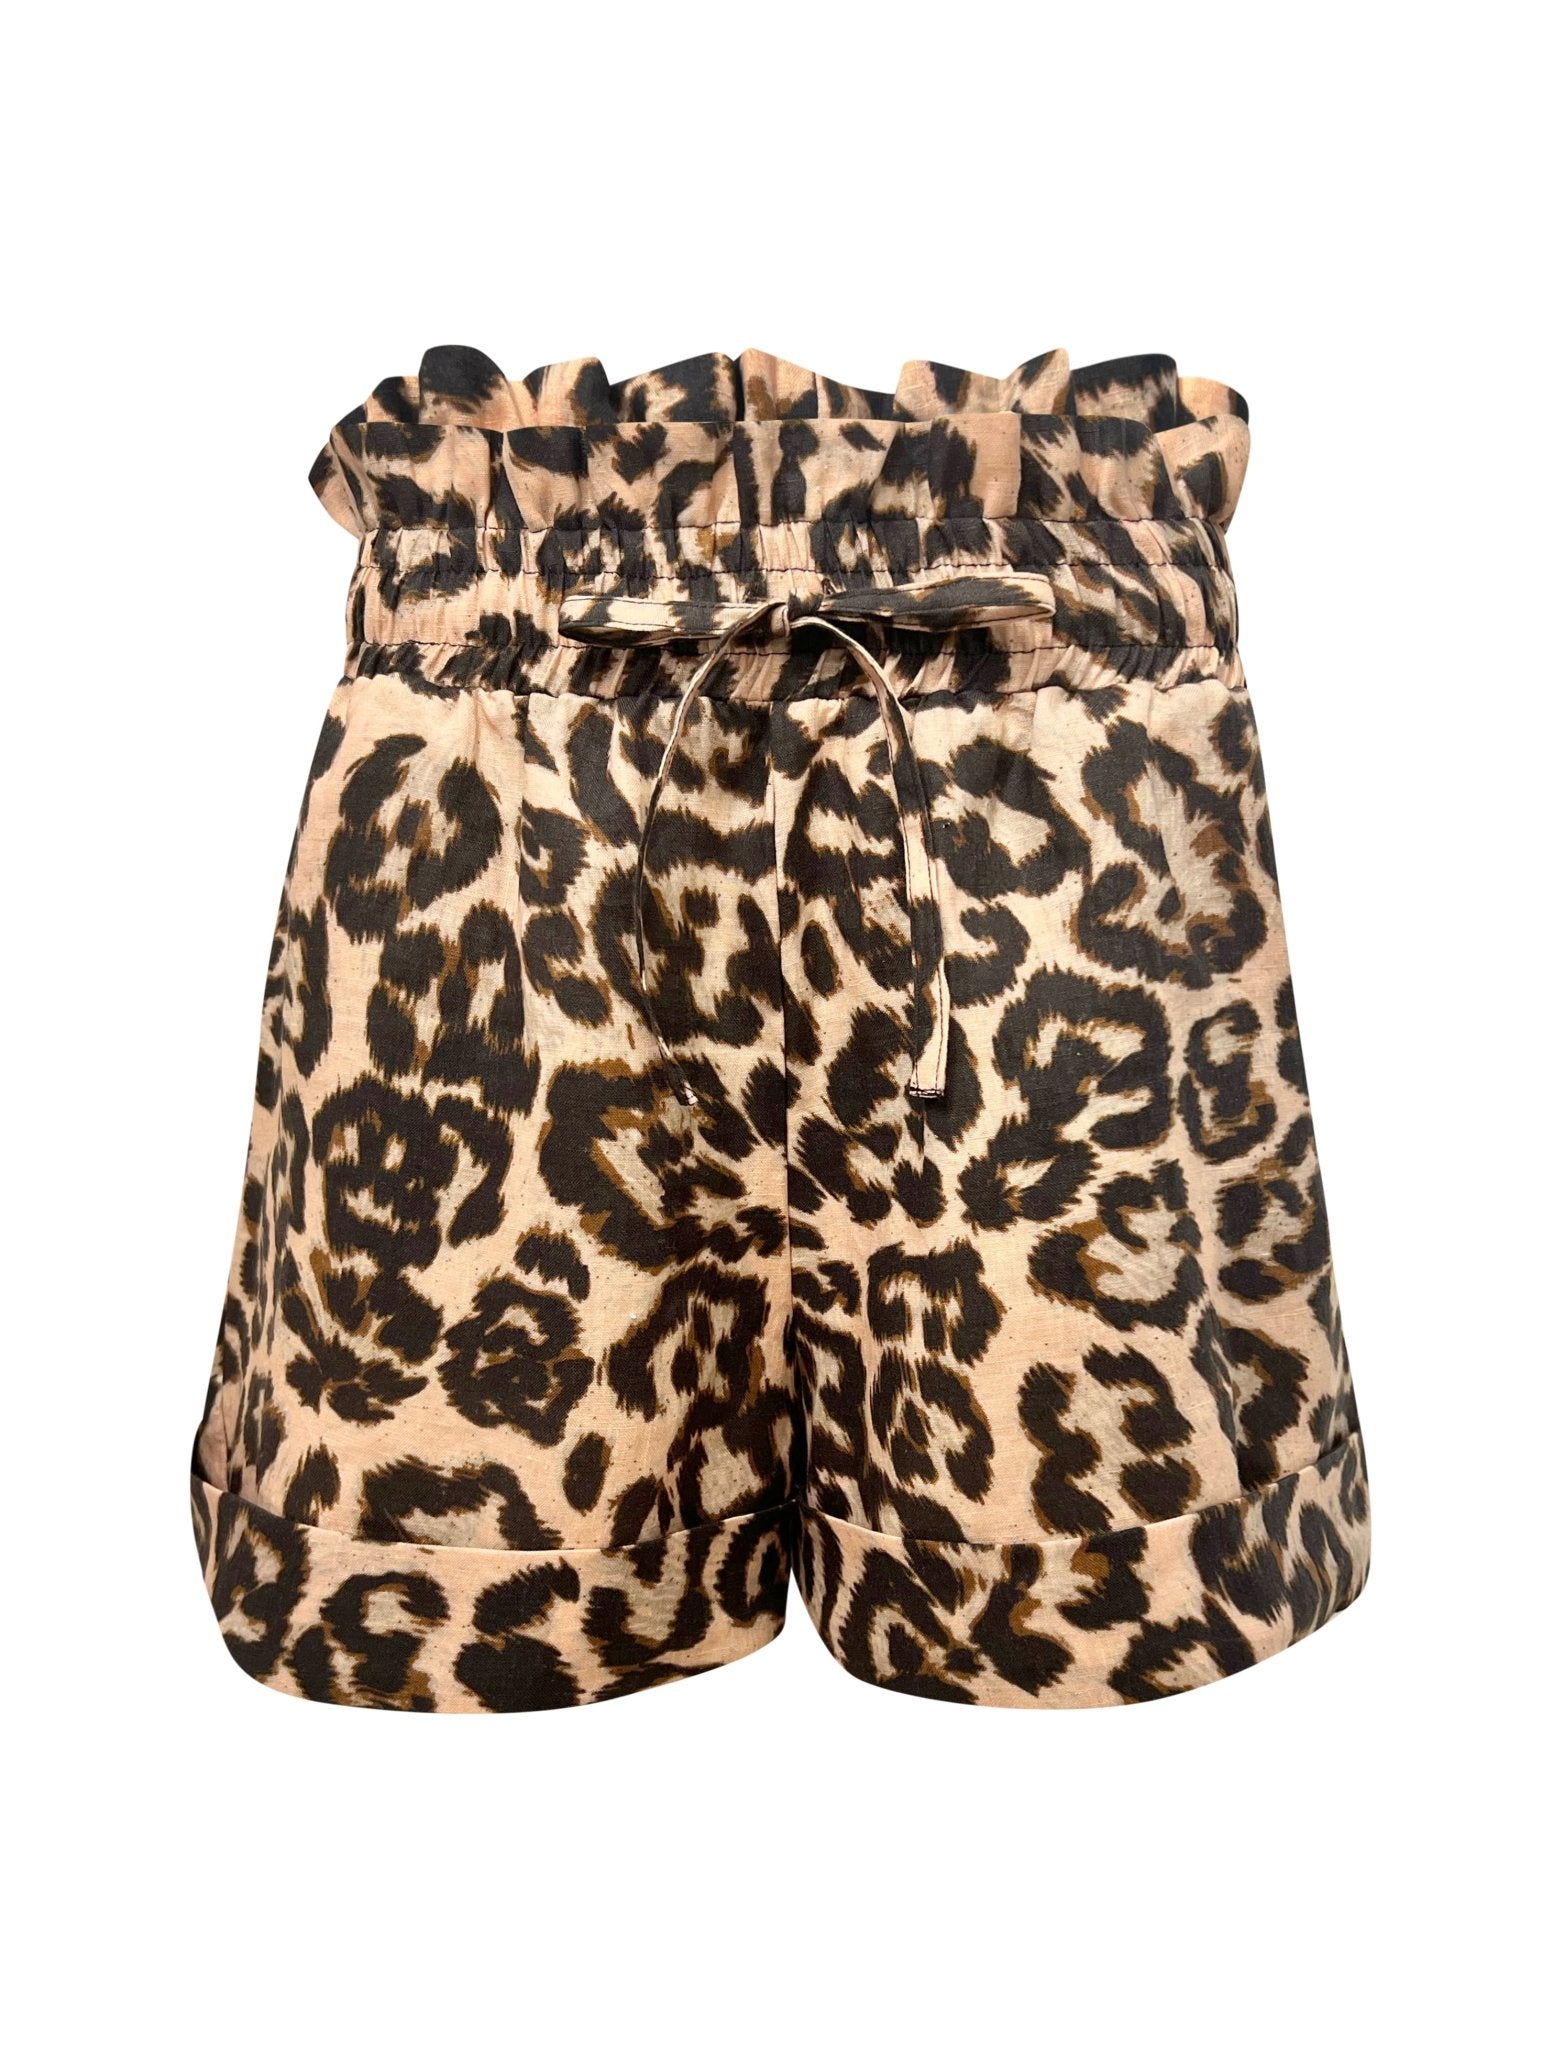 Cuffed Easy Shorts - Peachy Leopard - Sweepstake Winners™